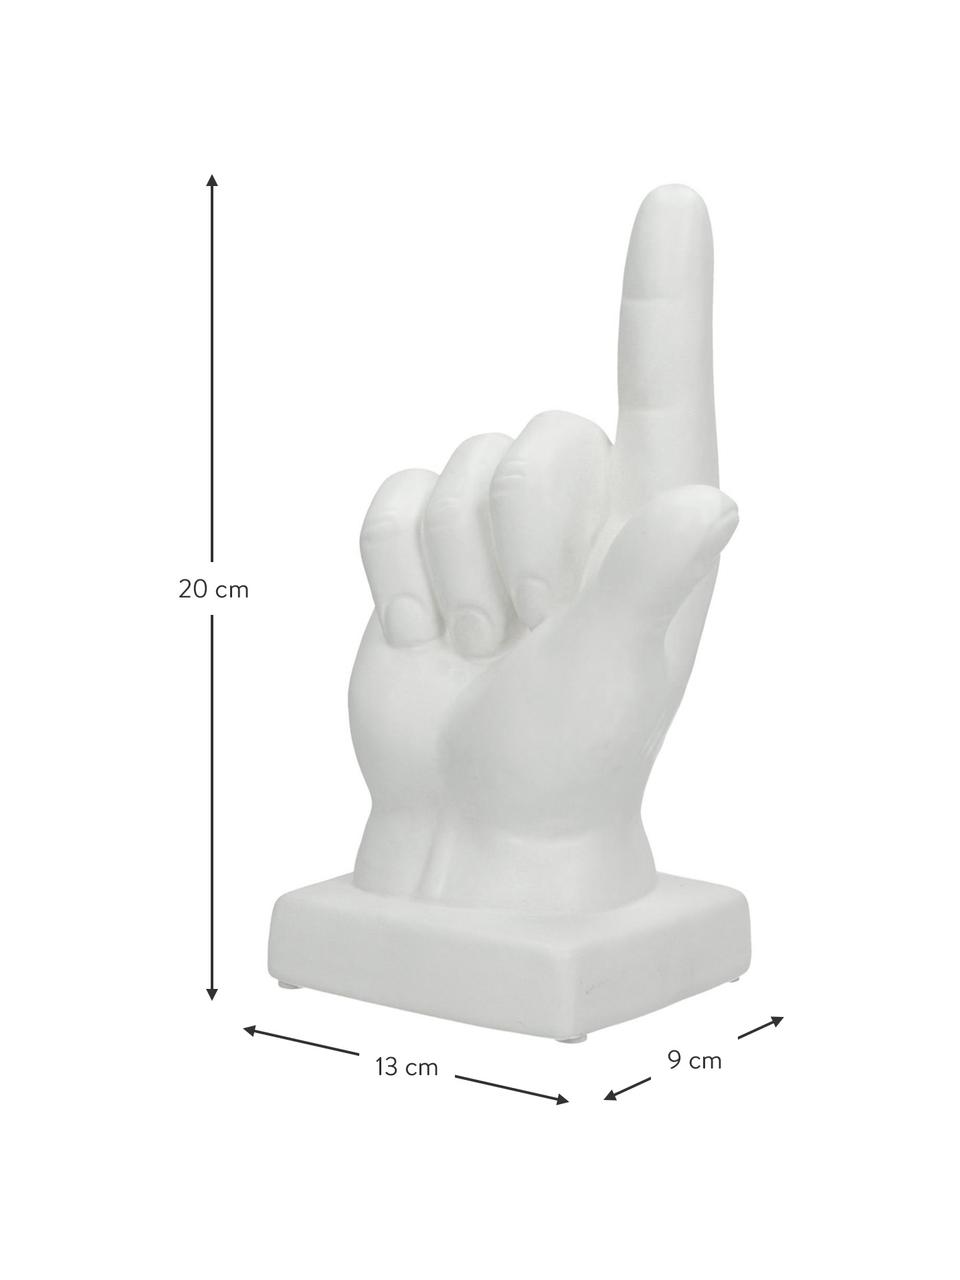 Dekorácia Finger, Kamenina, Biela, Š 13 x V 20 cm